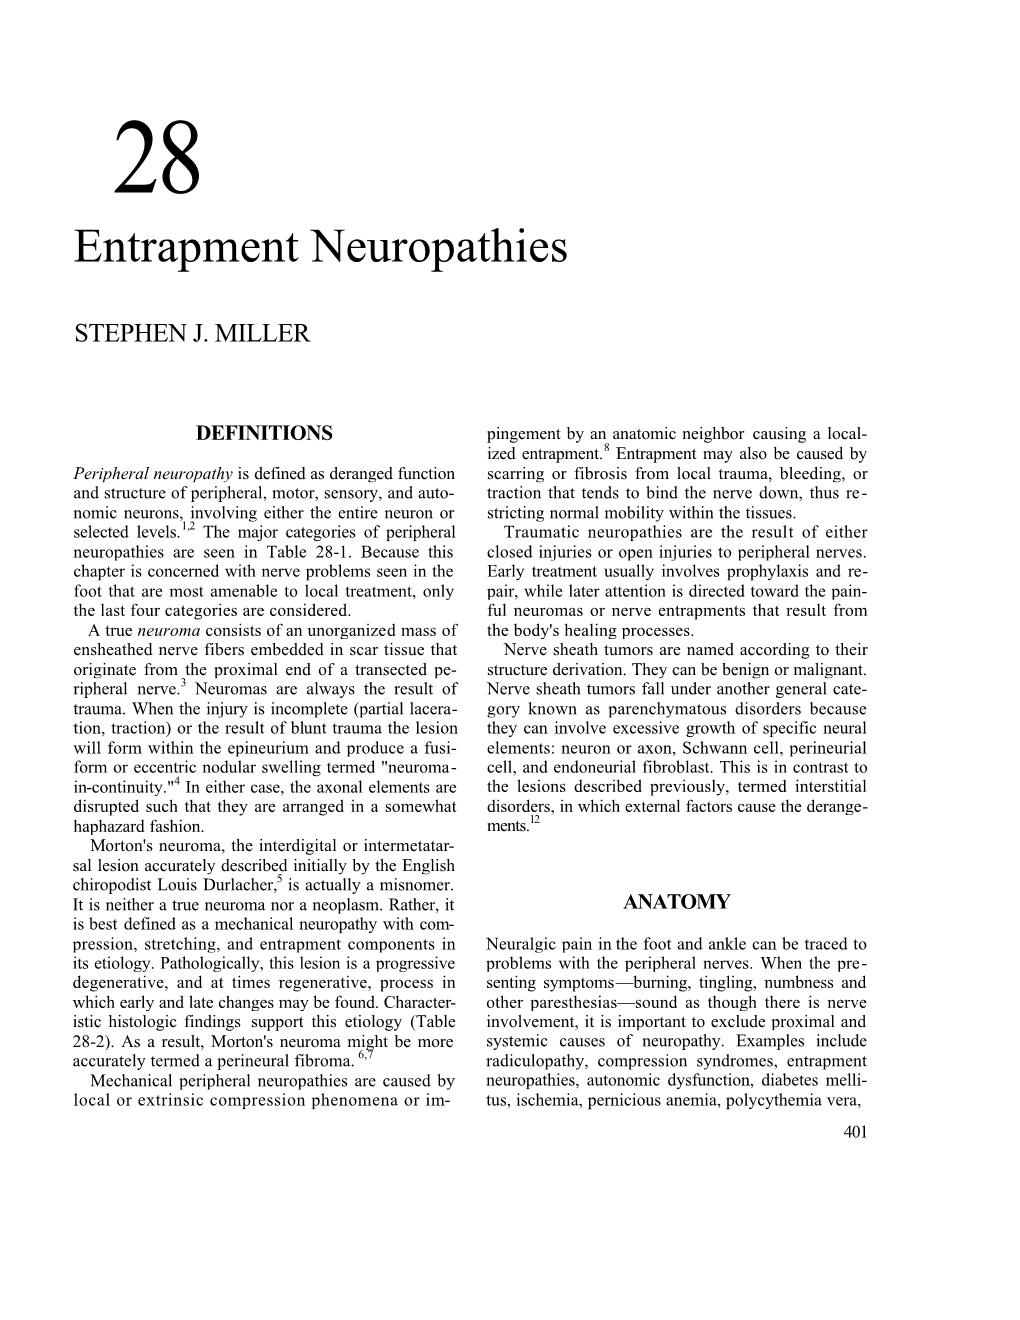 HV Chapter 28-Entrapment Neuropathies